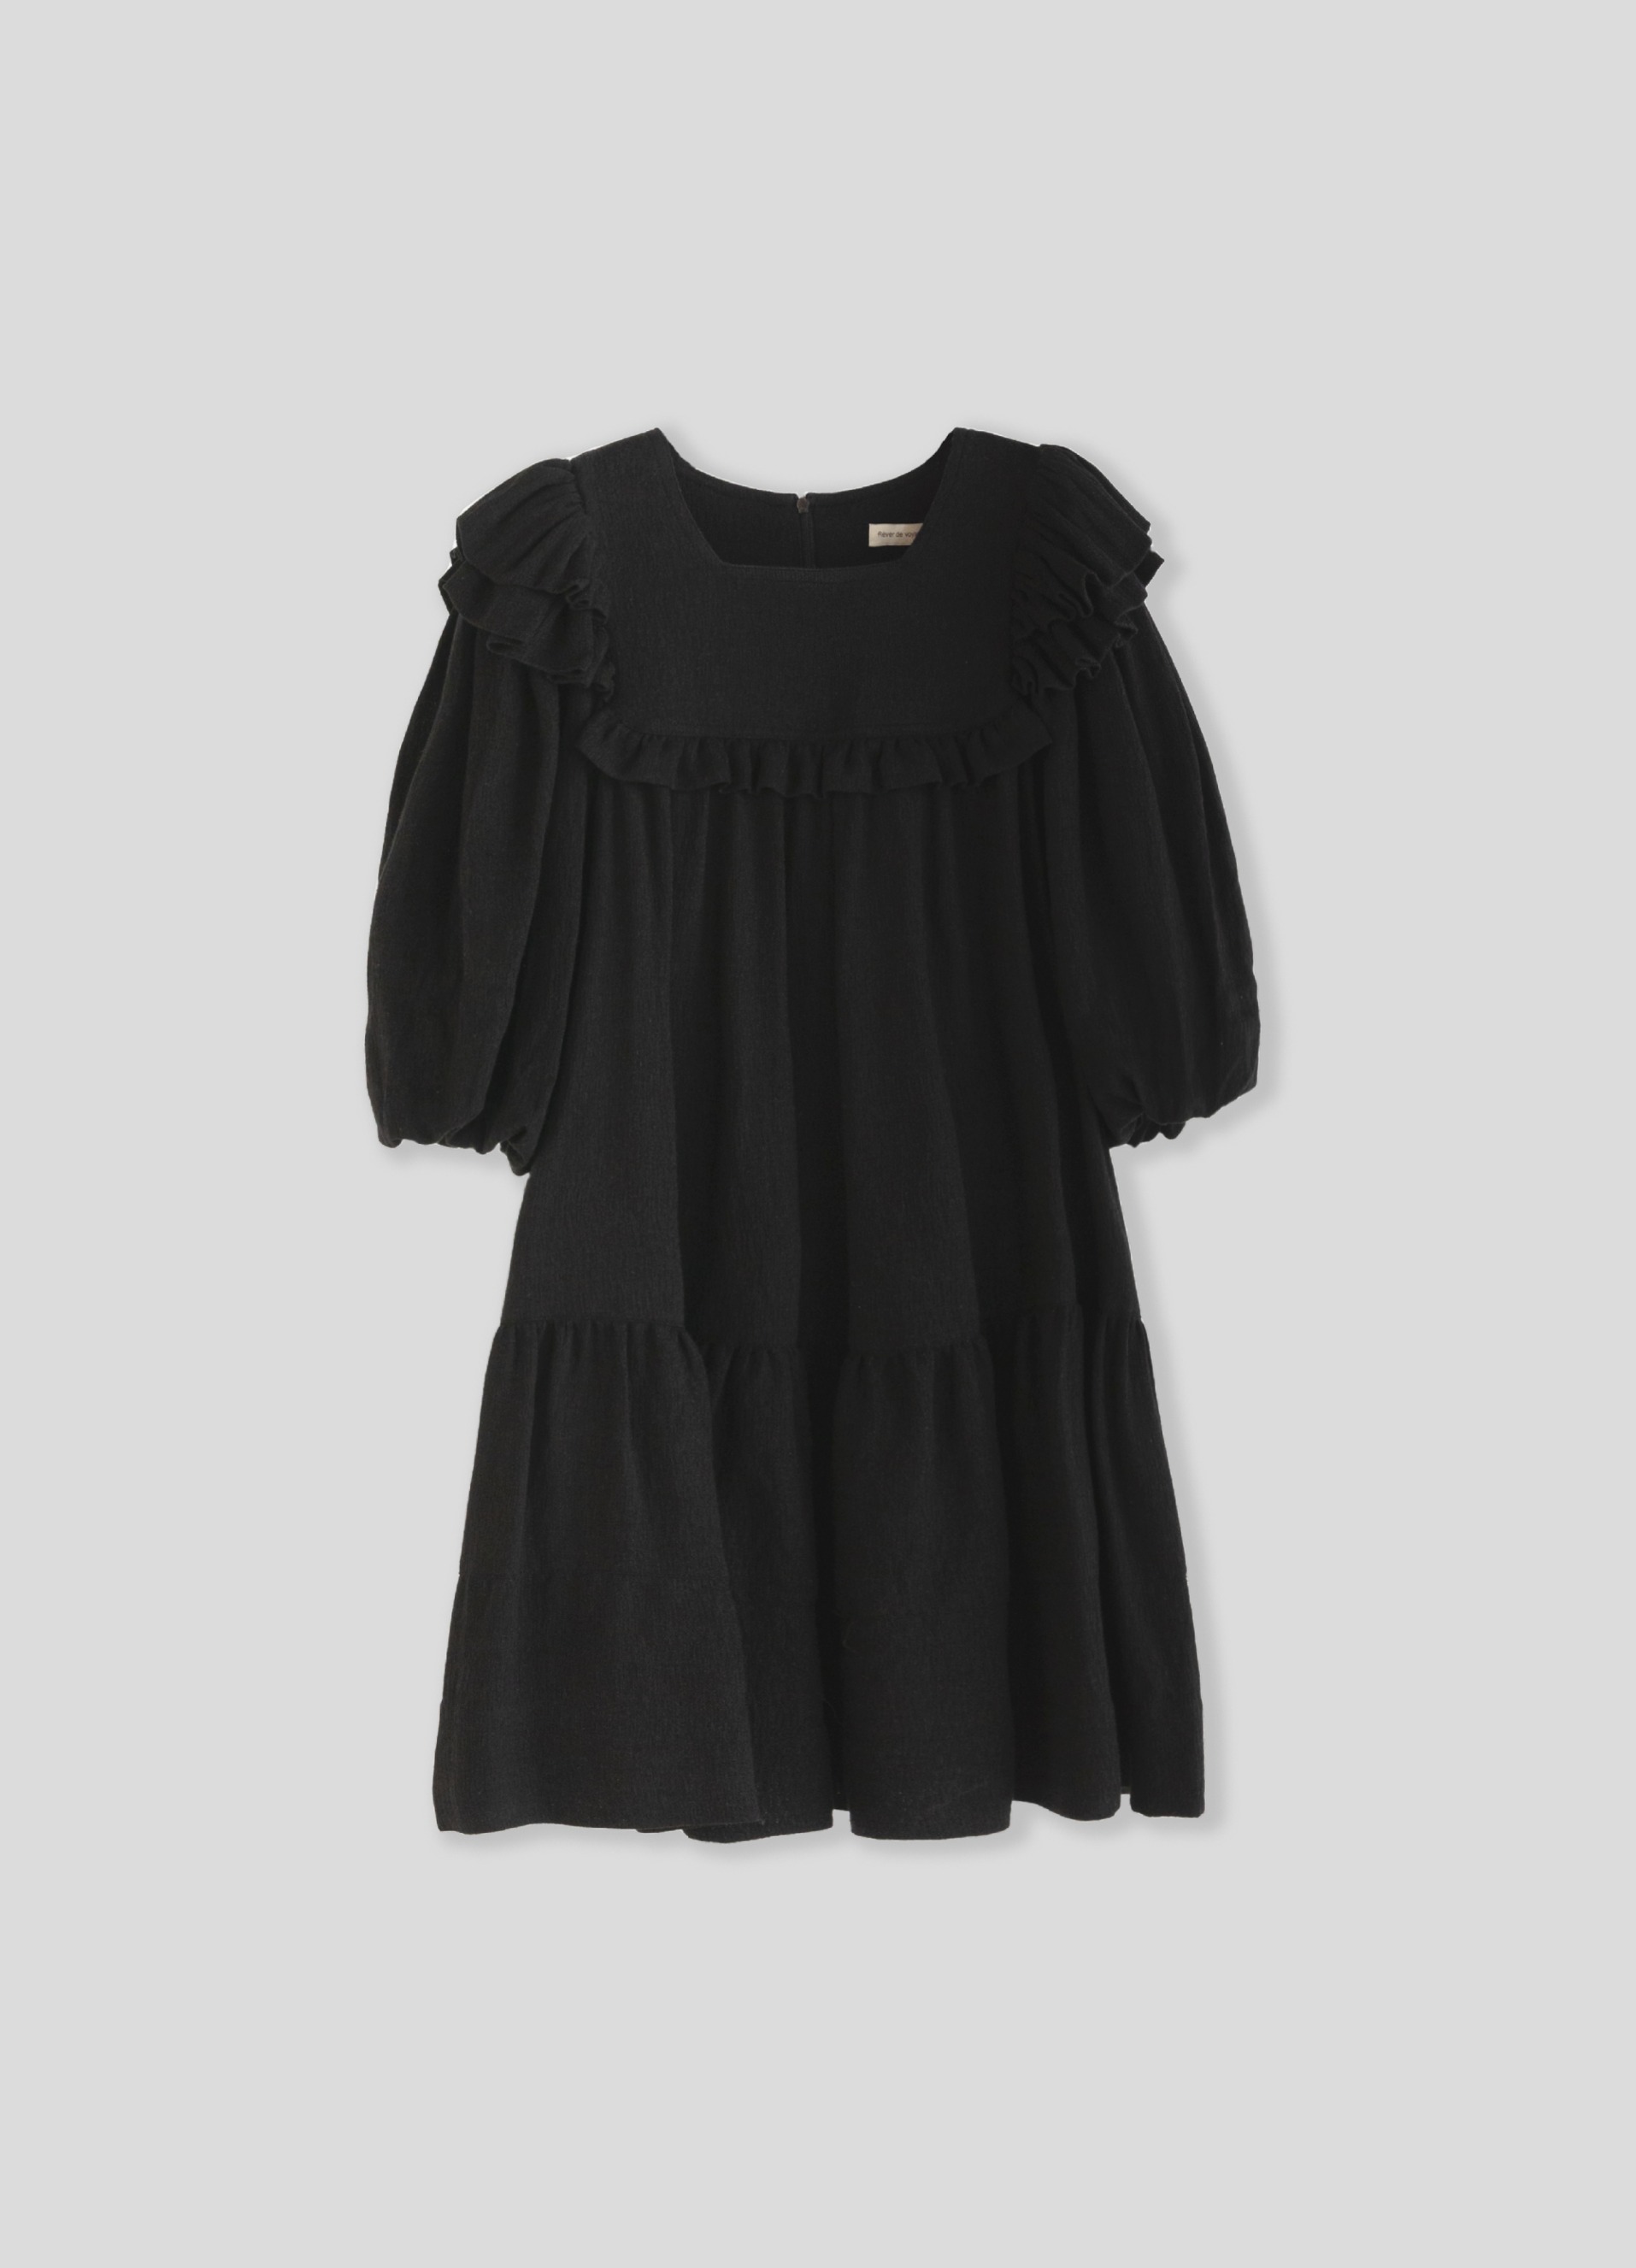 Puff Sleeve Short Dress (Black)